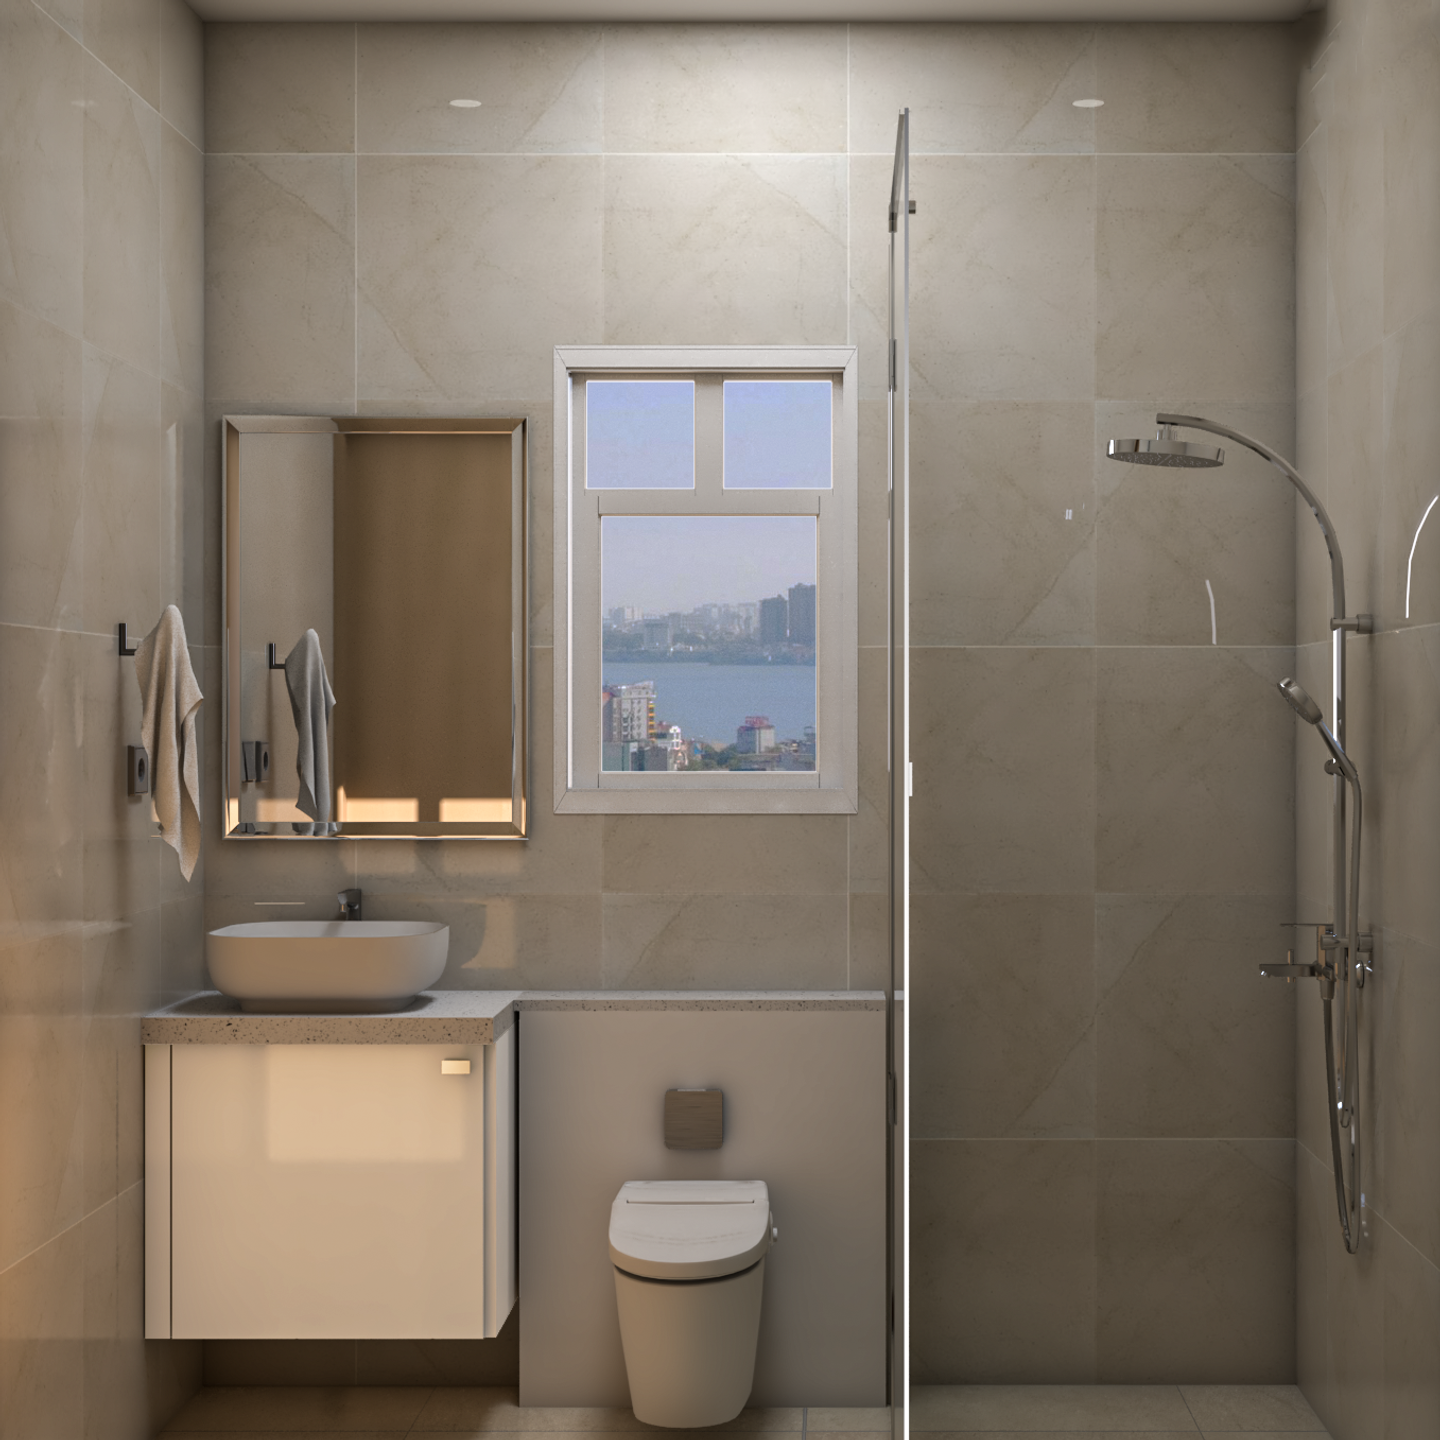 Modern Bathroom Design For Rental Homes - Livspace